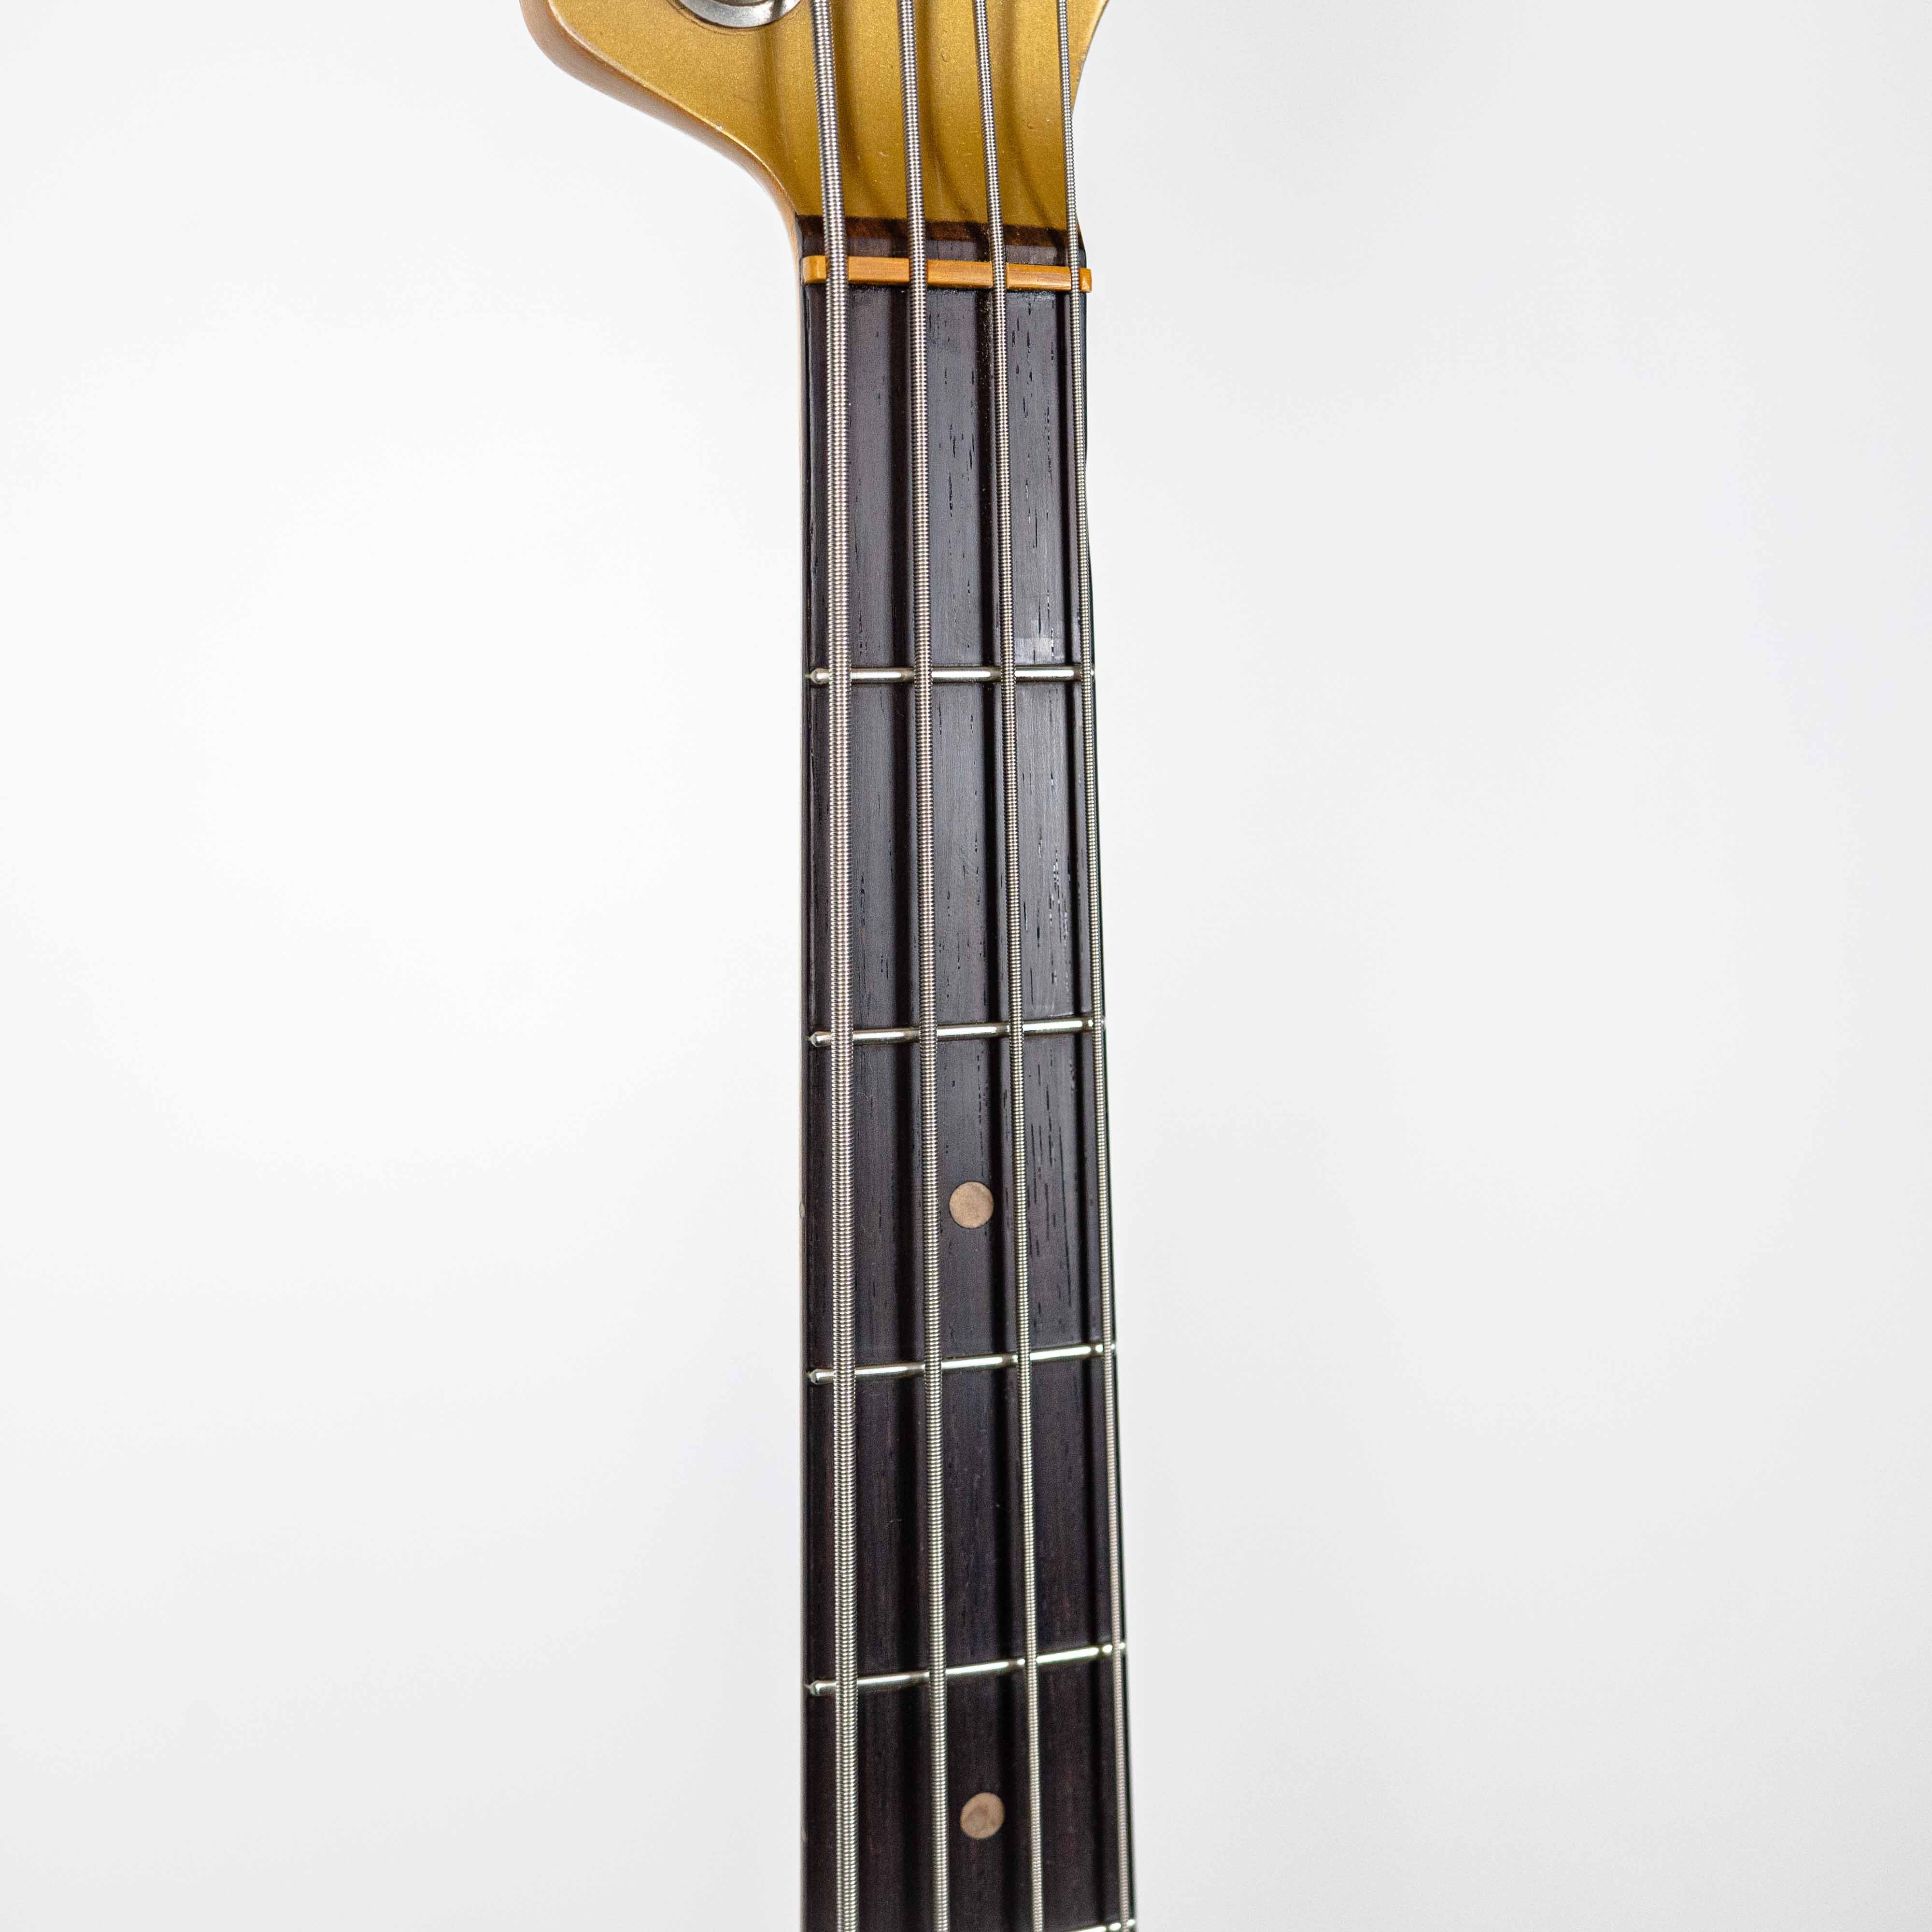 Fender 1964 Jazz Bass Shoreline Gold